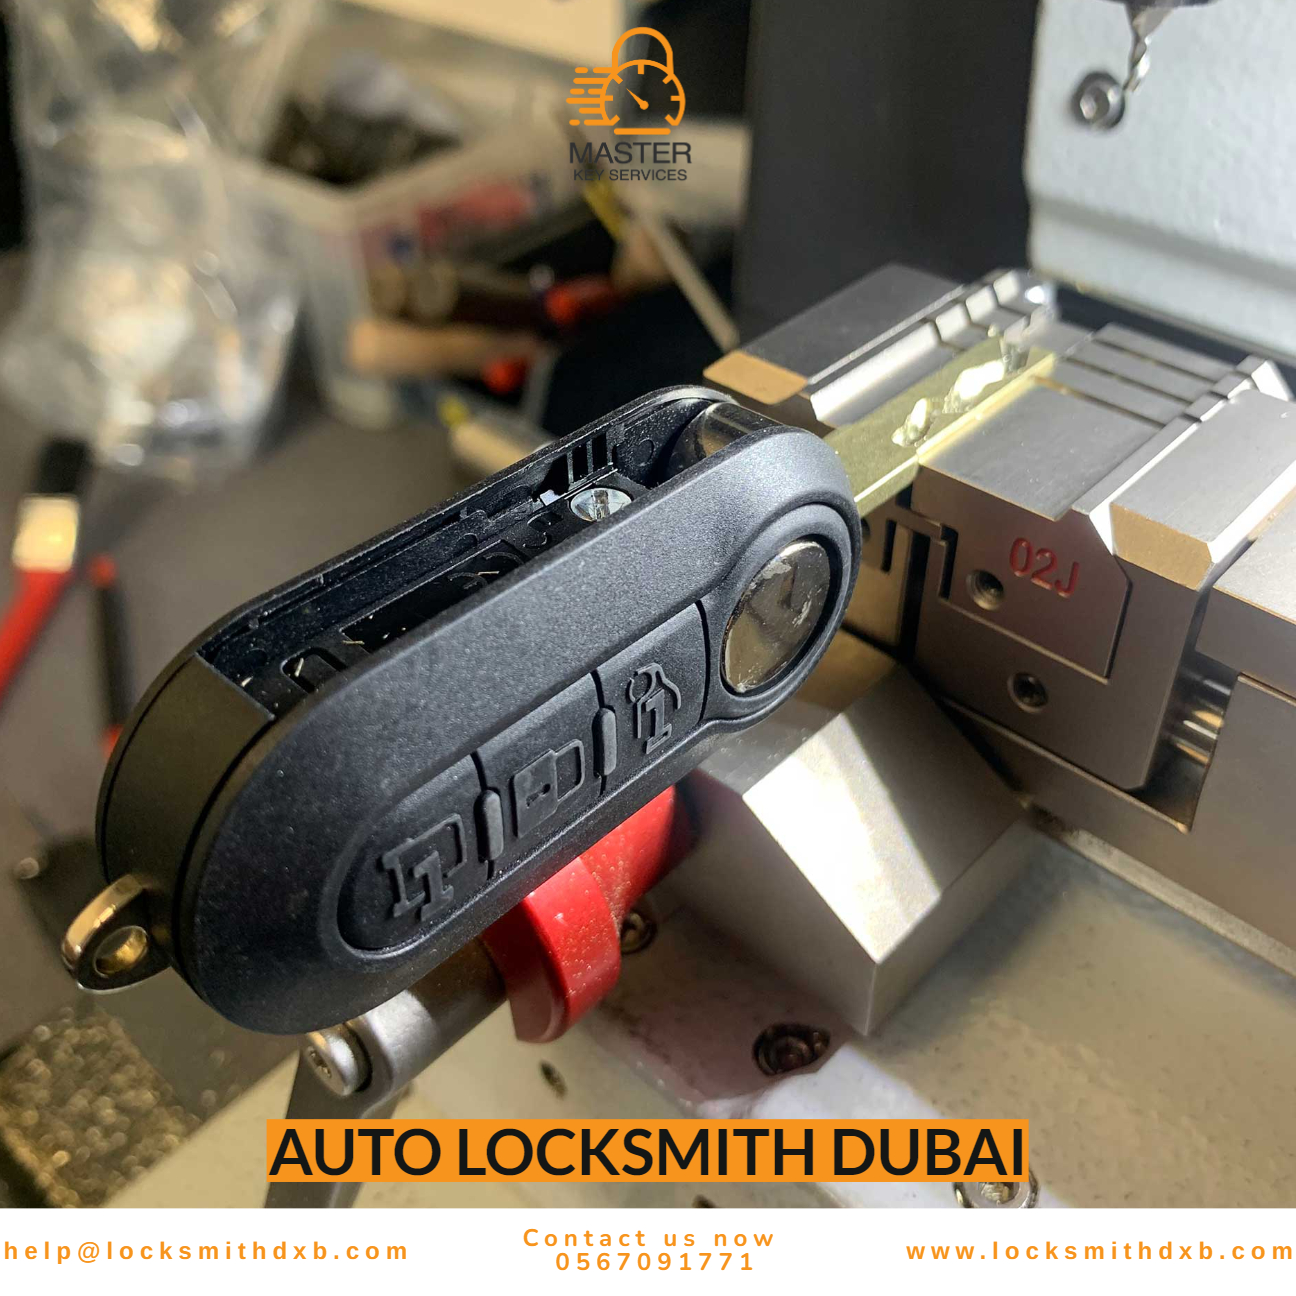 Auto locksmith Dubai